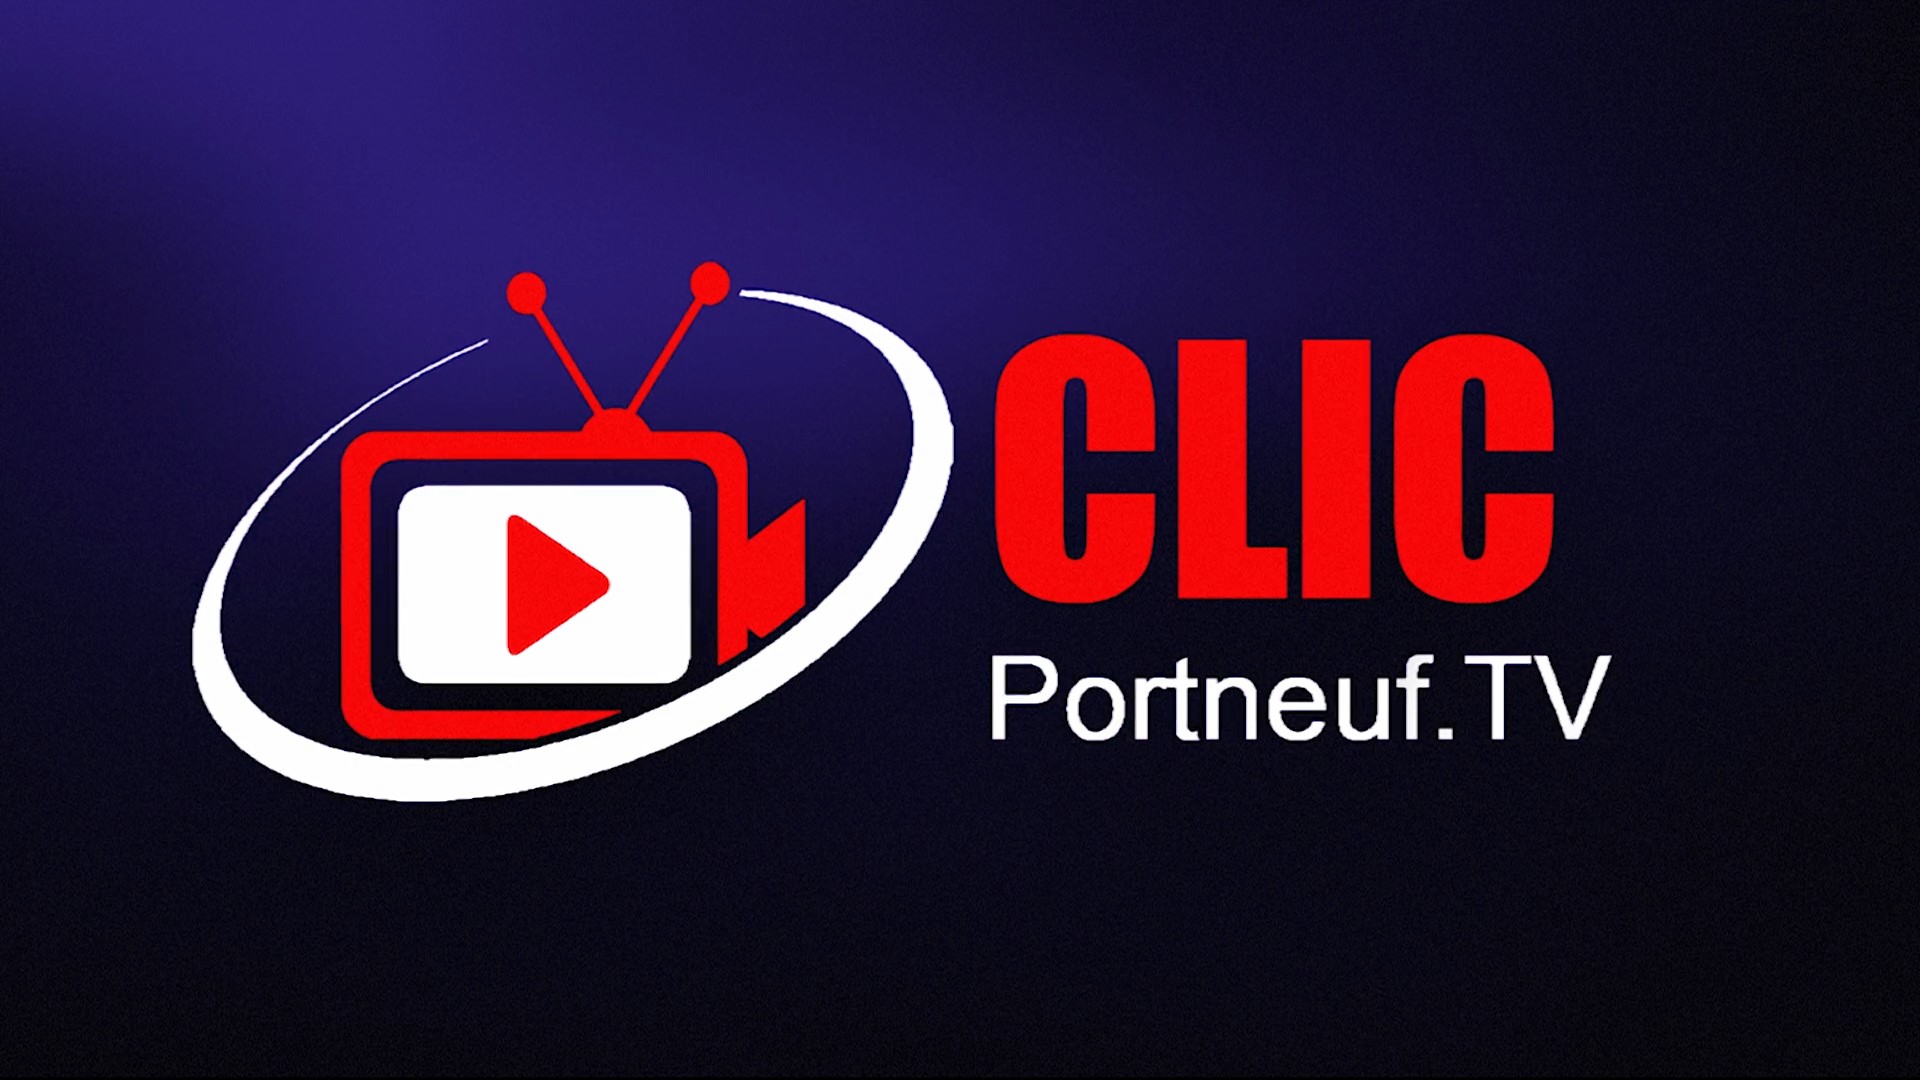 ClicInfo Portneuf